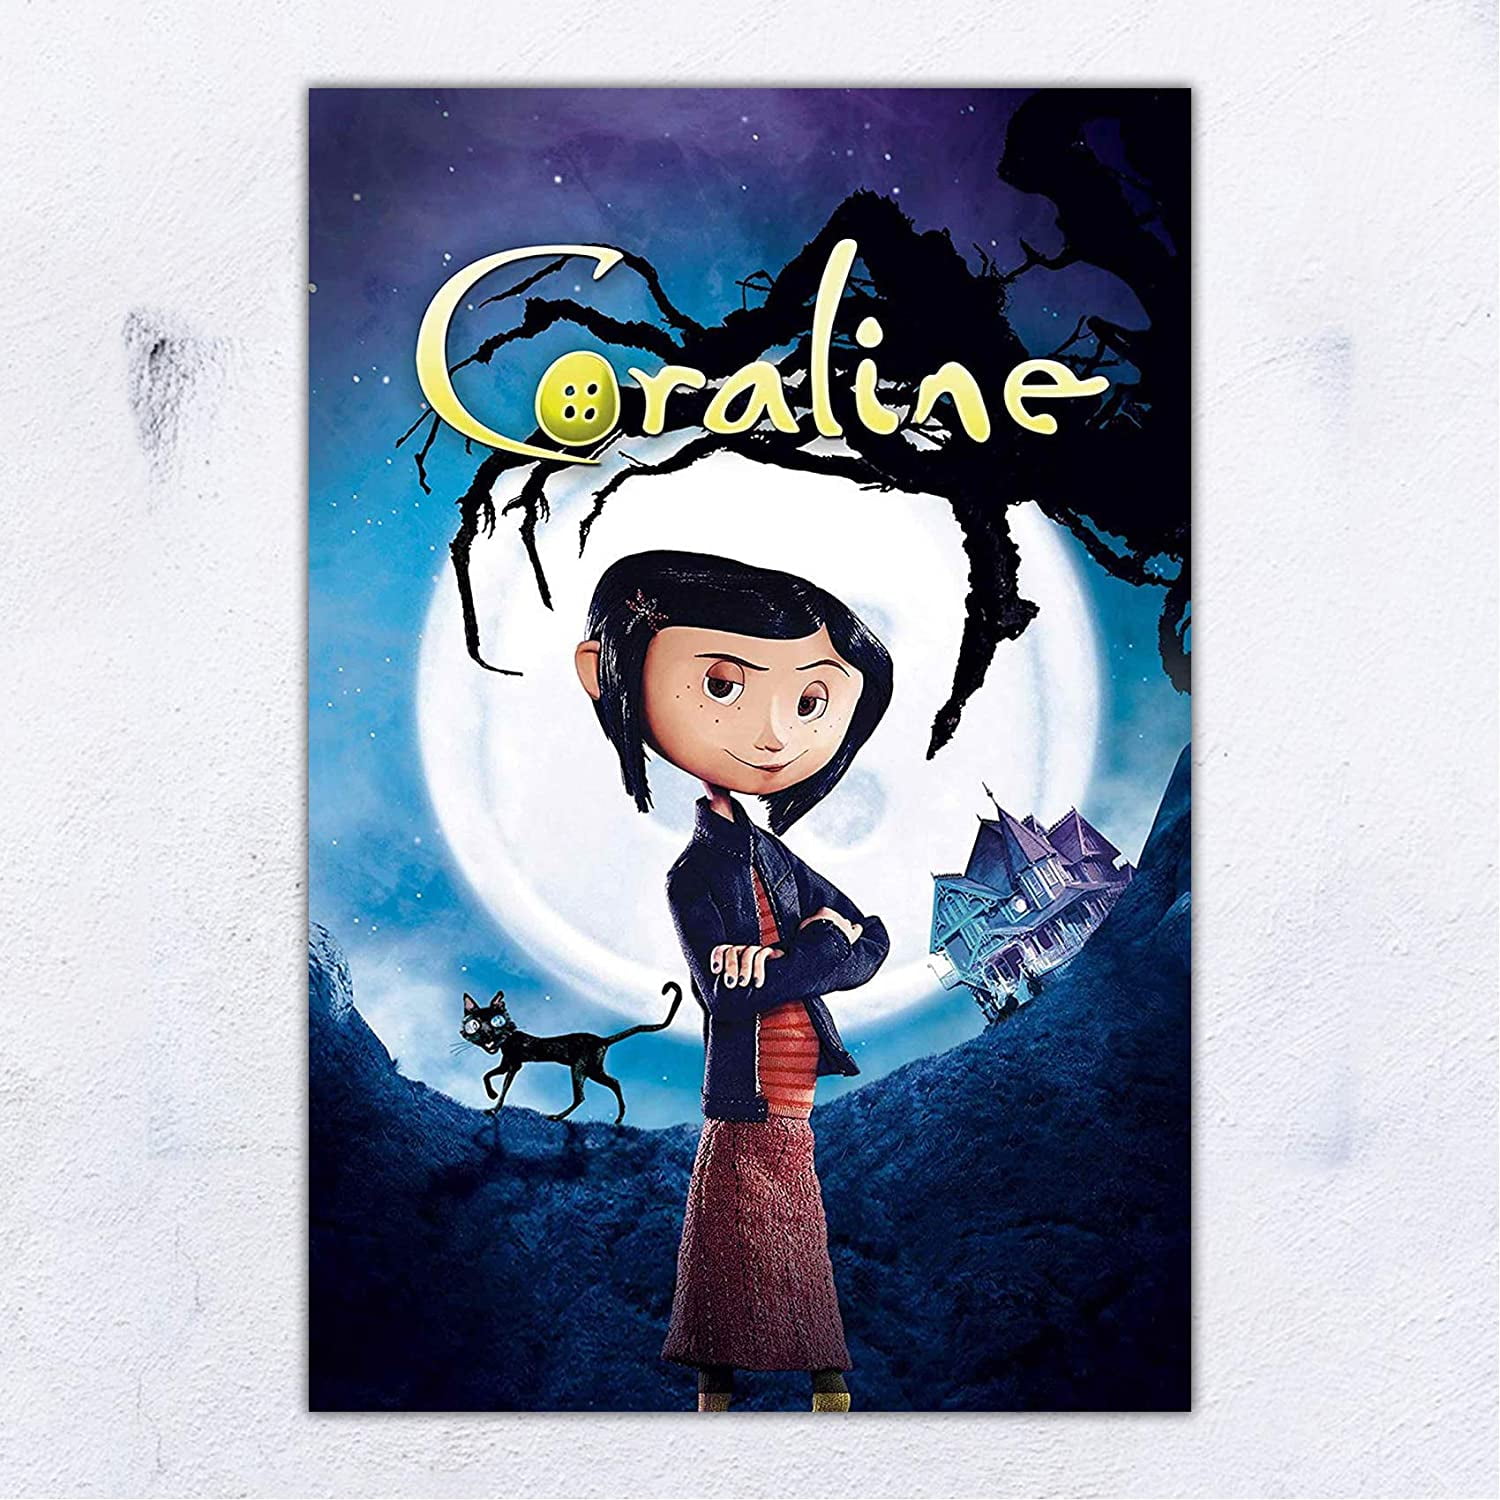 Coraline Movie Poster Wall Decor Frameless Gift 12 x 18 inch(30cm x 46cm)